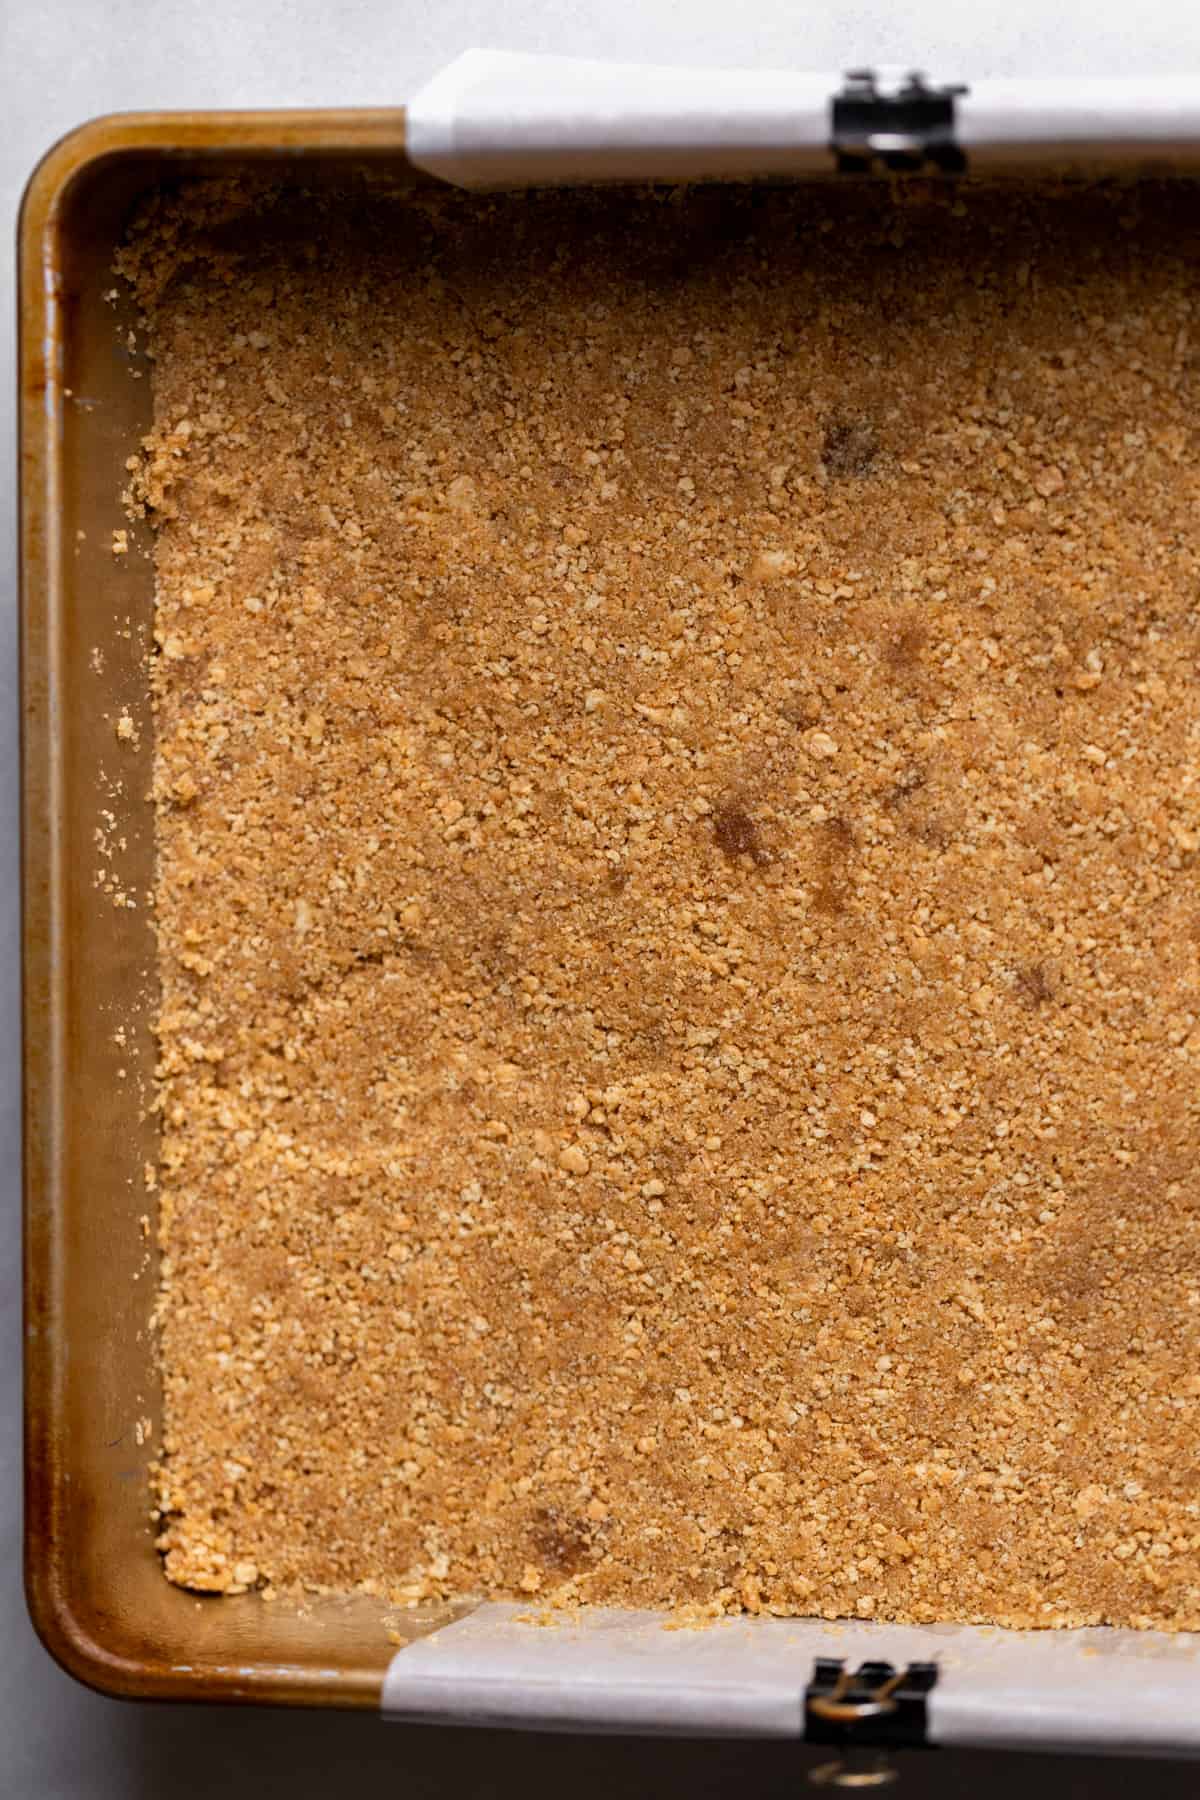 Graham cracker crust in a pan.